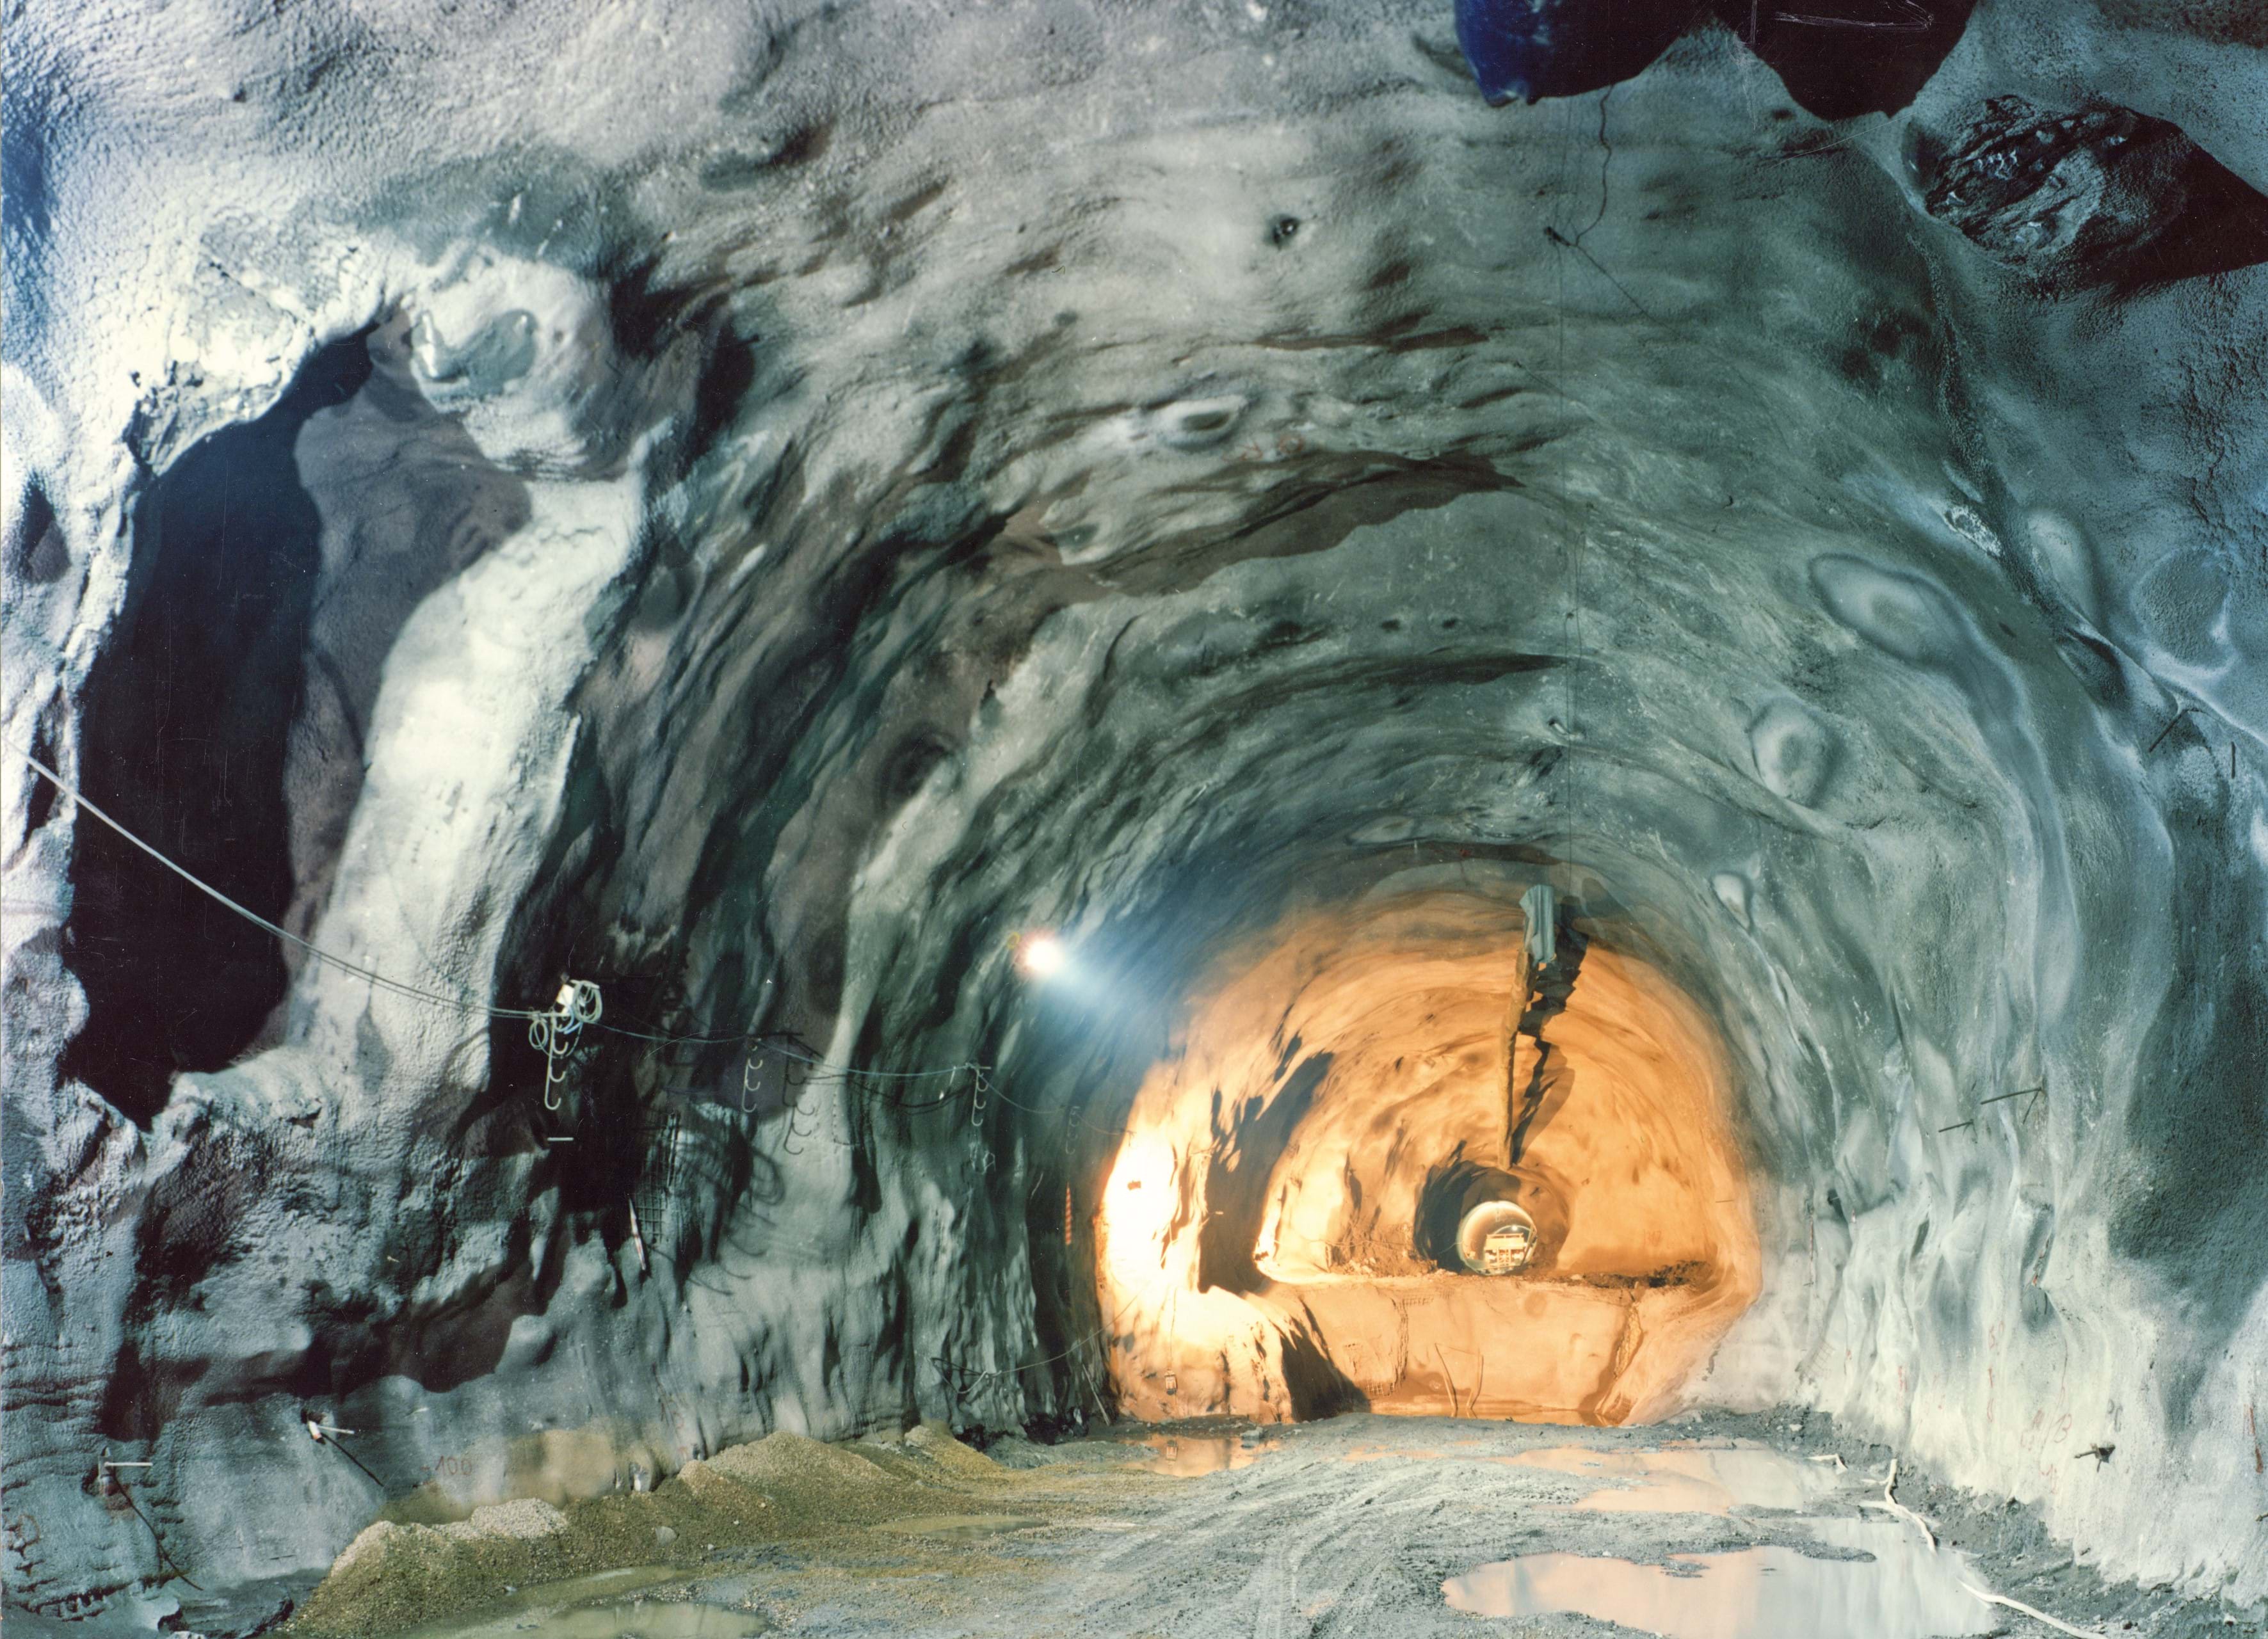 Tunnel construction